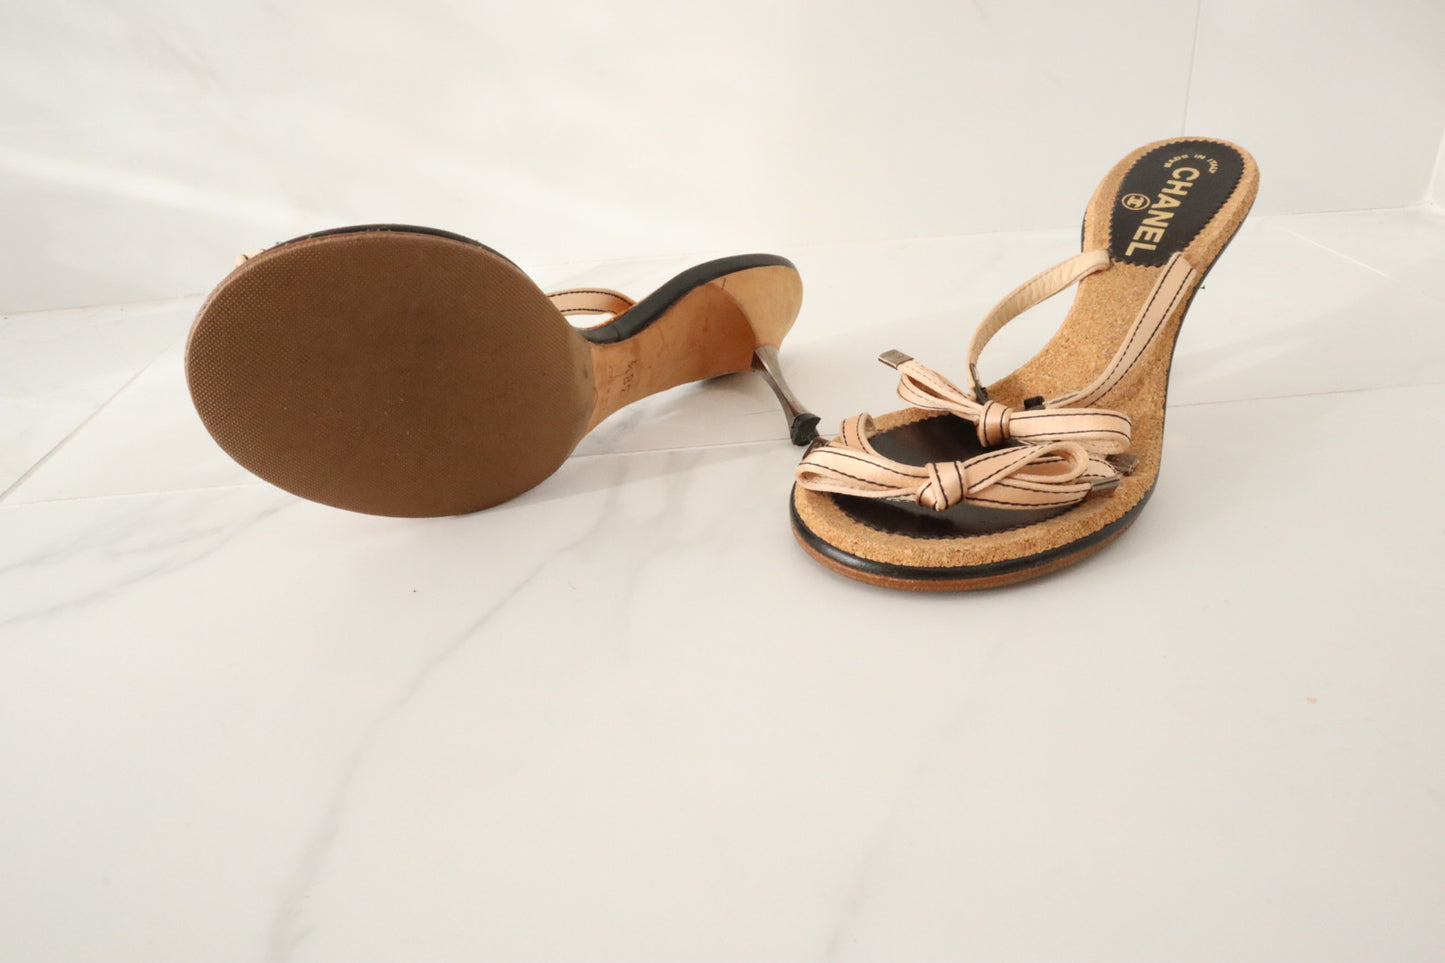 Chanel satin bow heels (38.5)